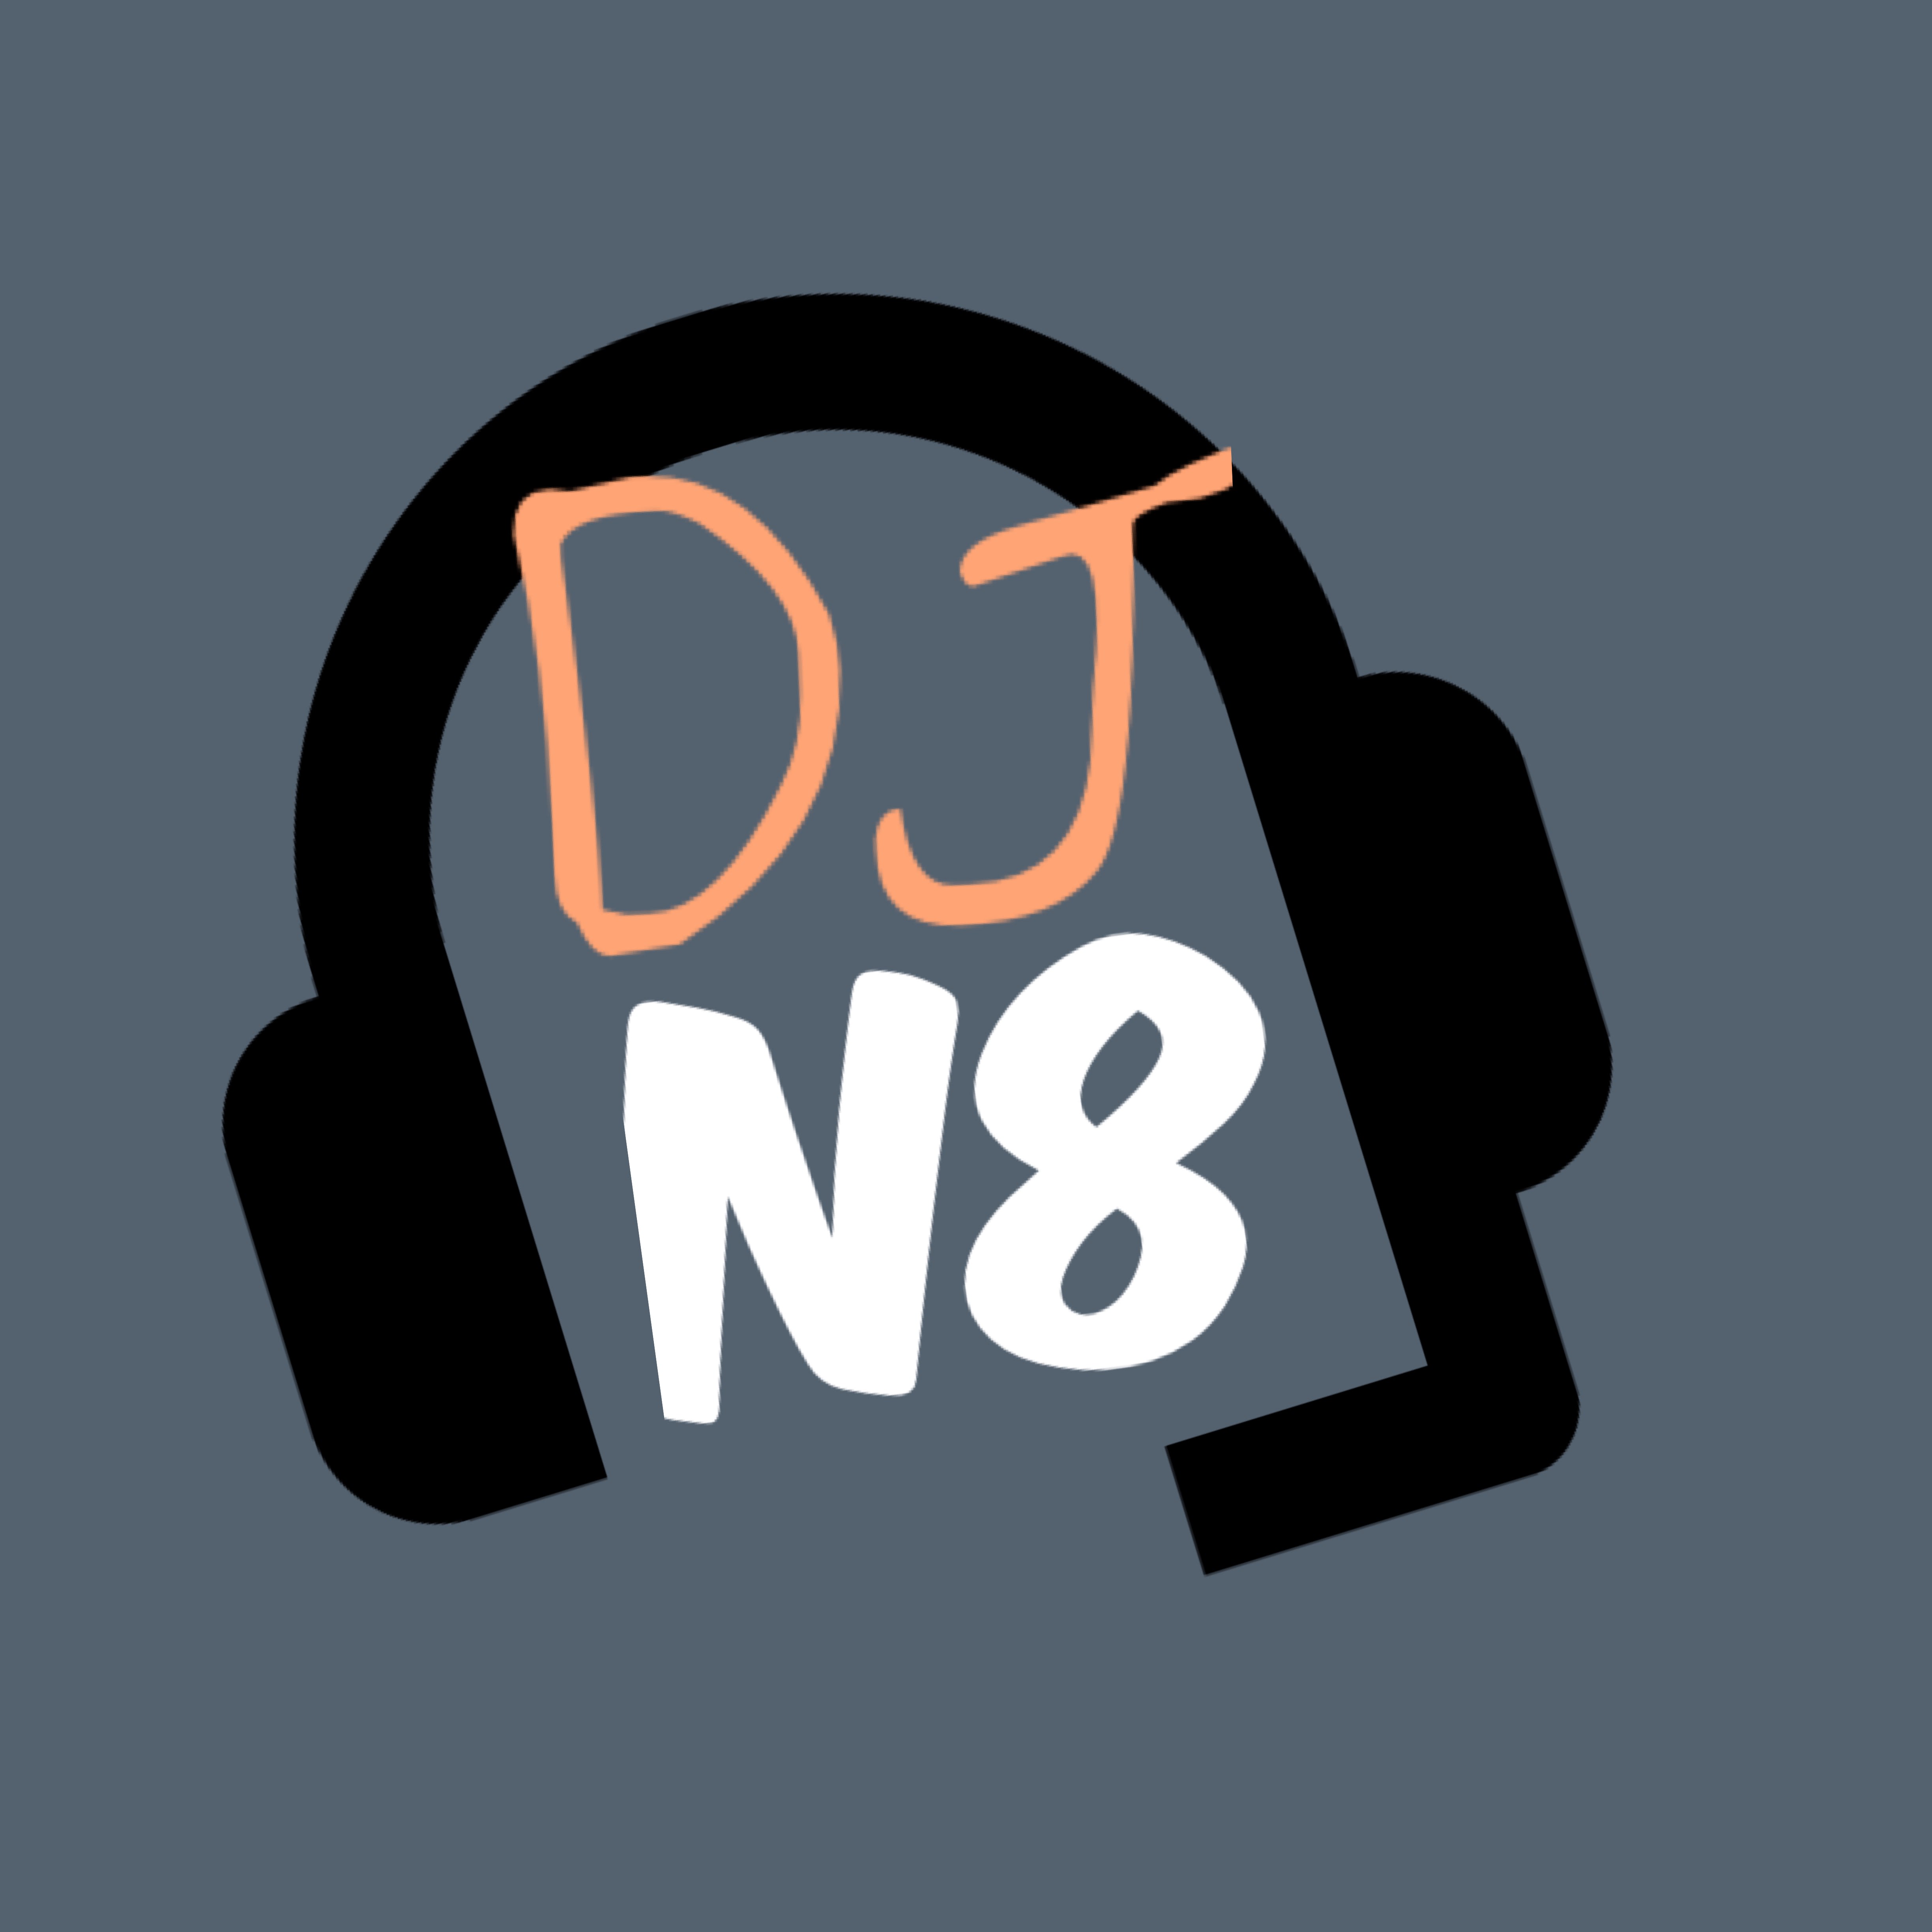 DJ Master Nate